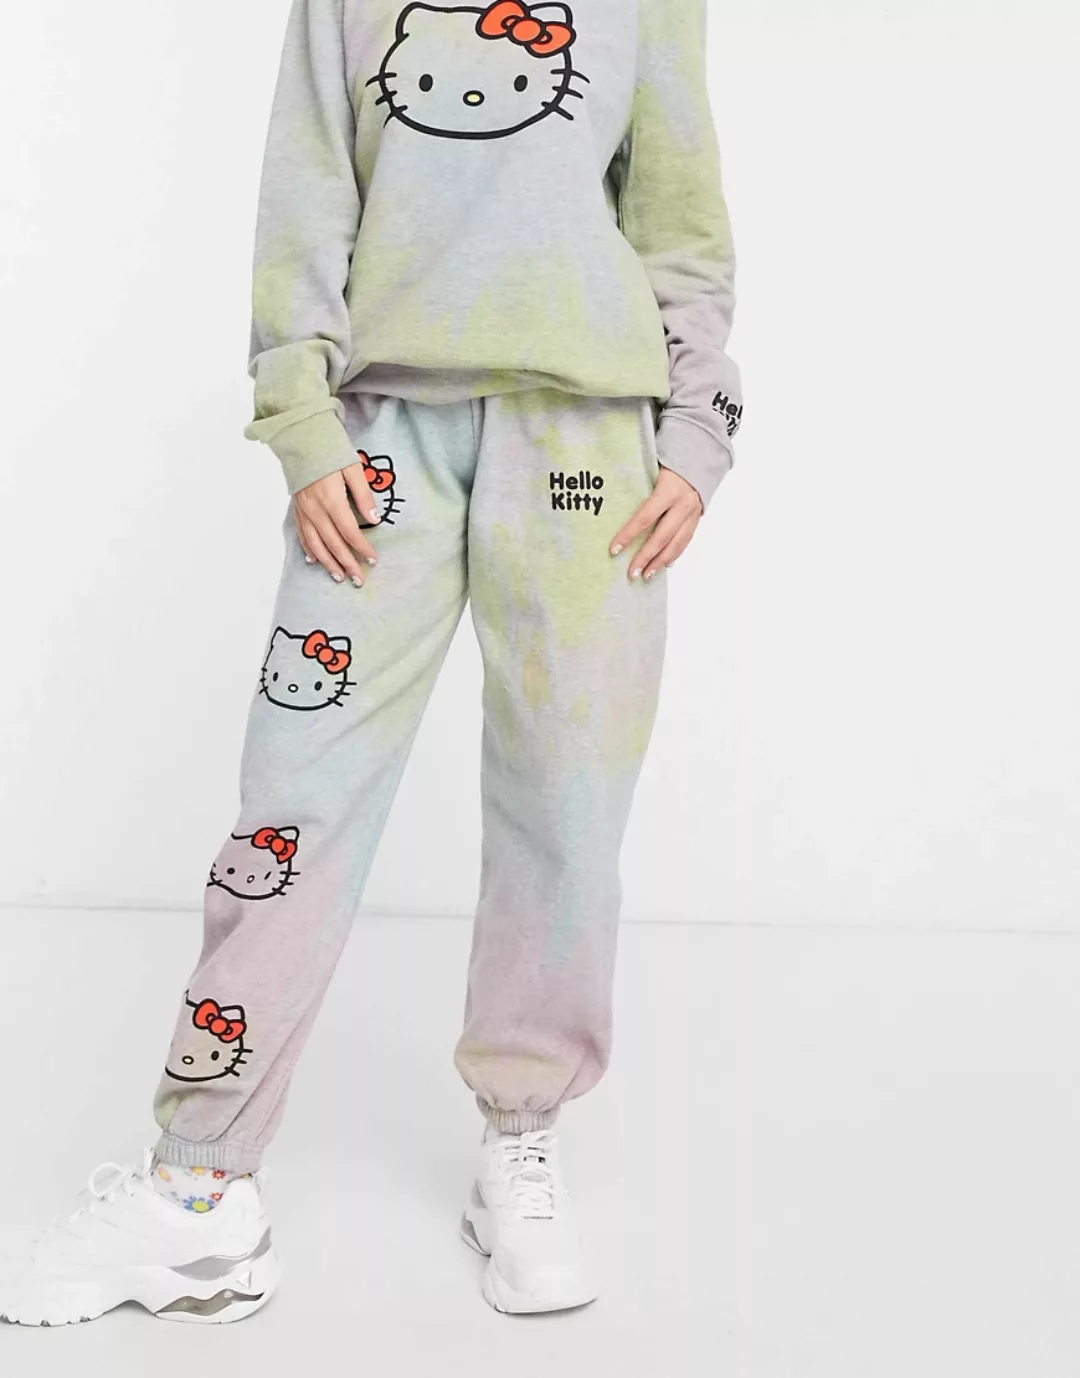 New Girl Order x Hello Kitty – Legere Jogginghose in Regenbogenfarben, Komb günstig online kaufen